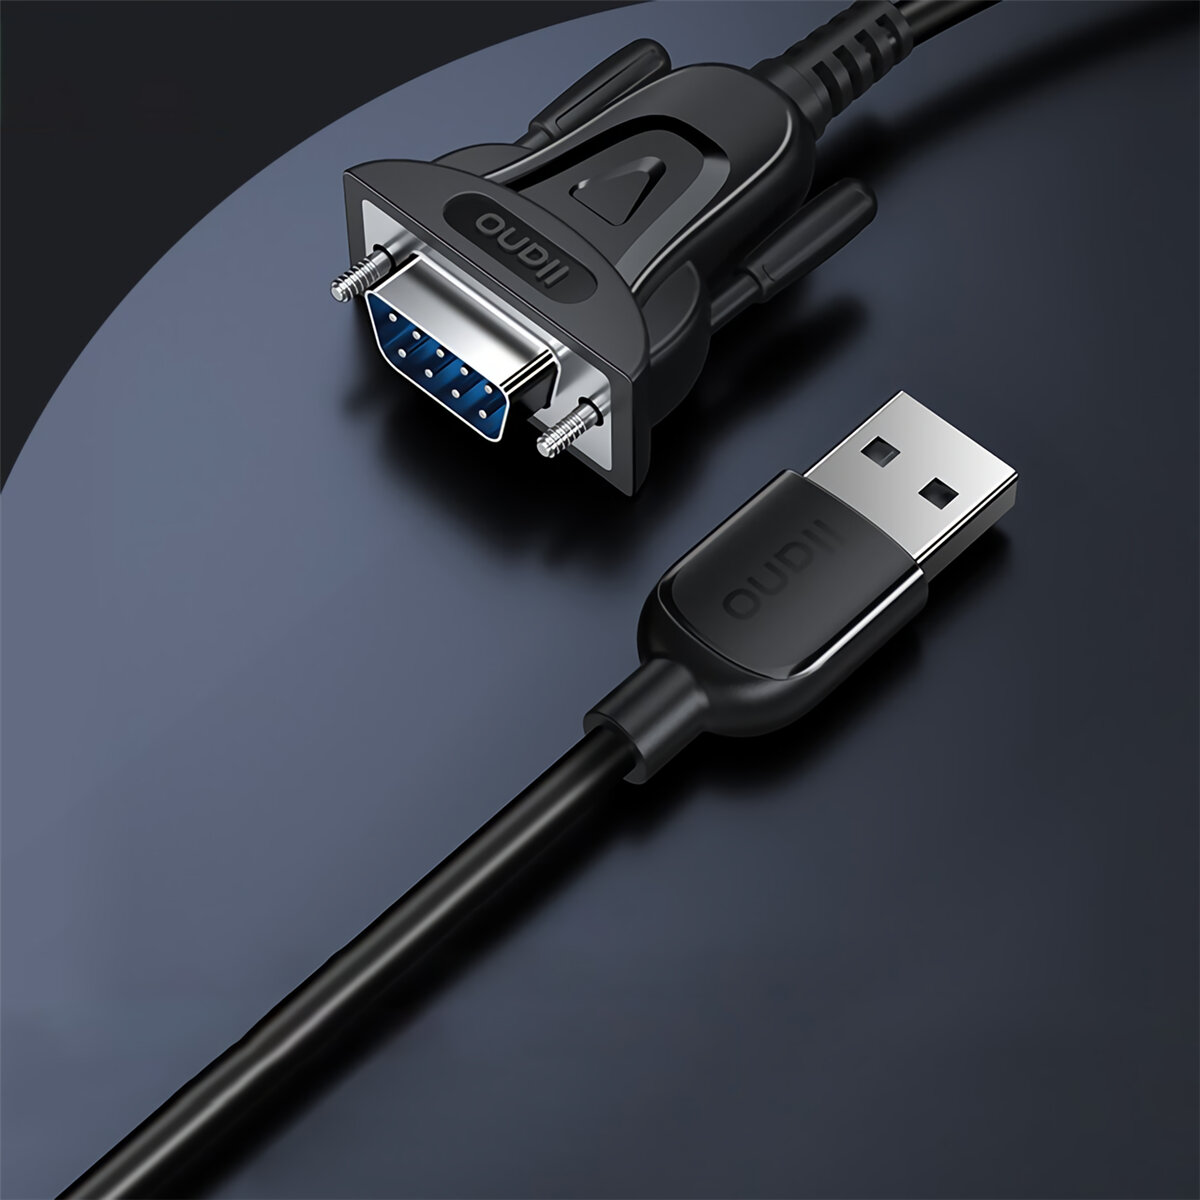 llano USB naar RS232 Seri?le Kabel USB naar DB 9Pin Kabel Adapter PL2303 Chip voor Windows 7 8.1 XP 